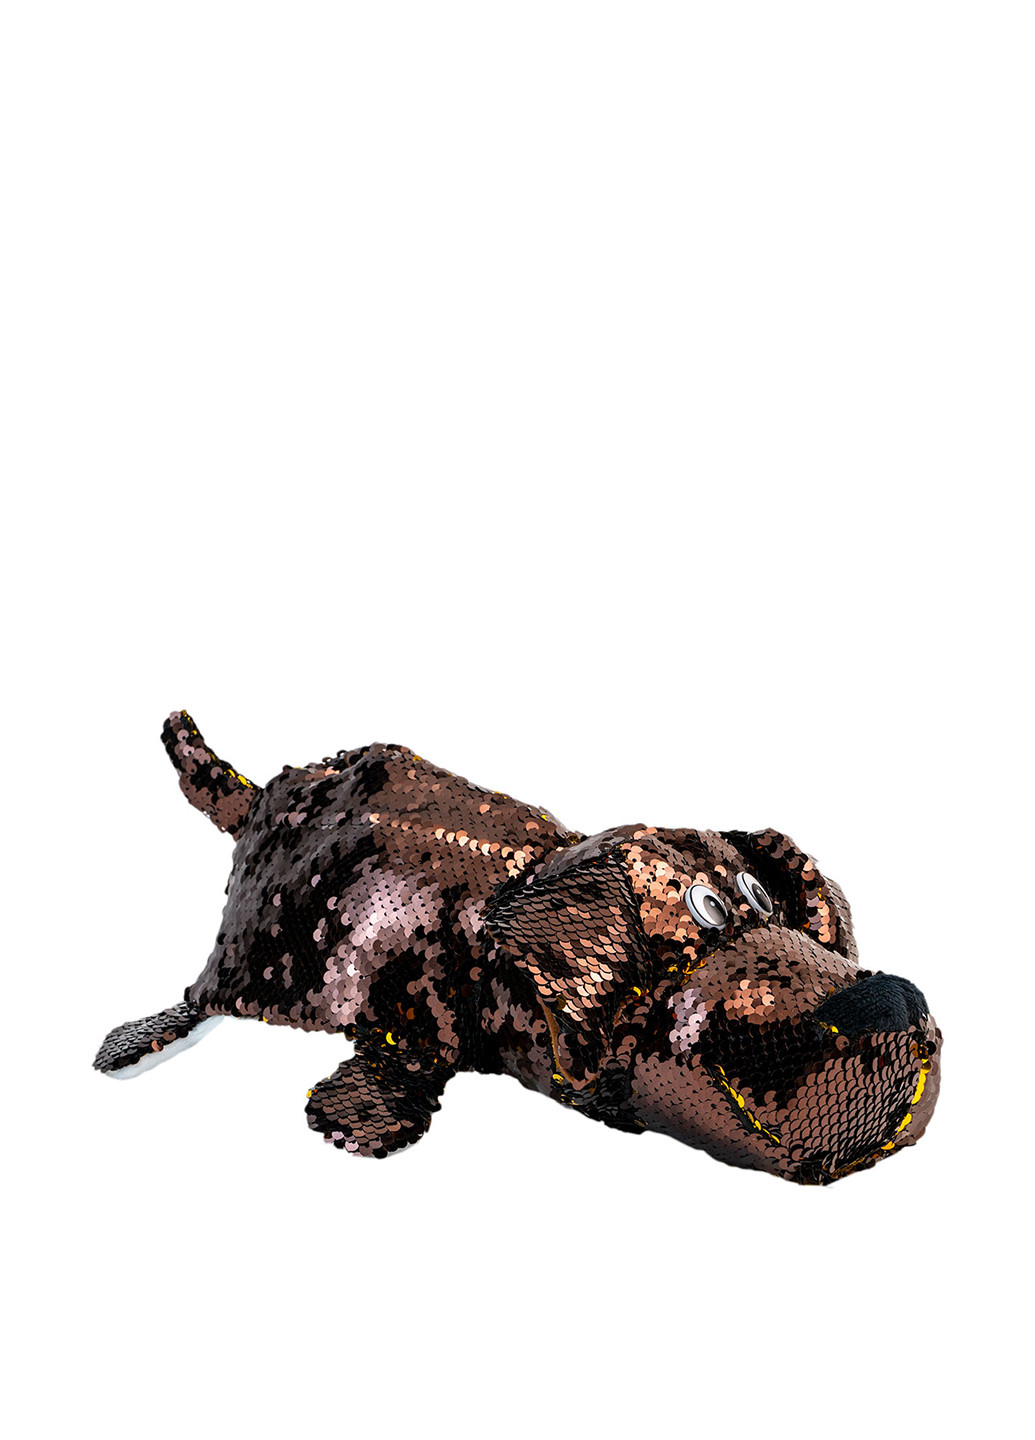 Мягкая игрушка с пайетками 2 в 1 - - лабрадор-кот (30 cm) ZooPrяtki (170915844)